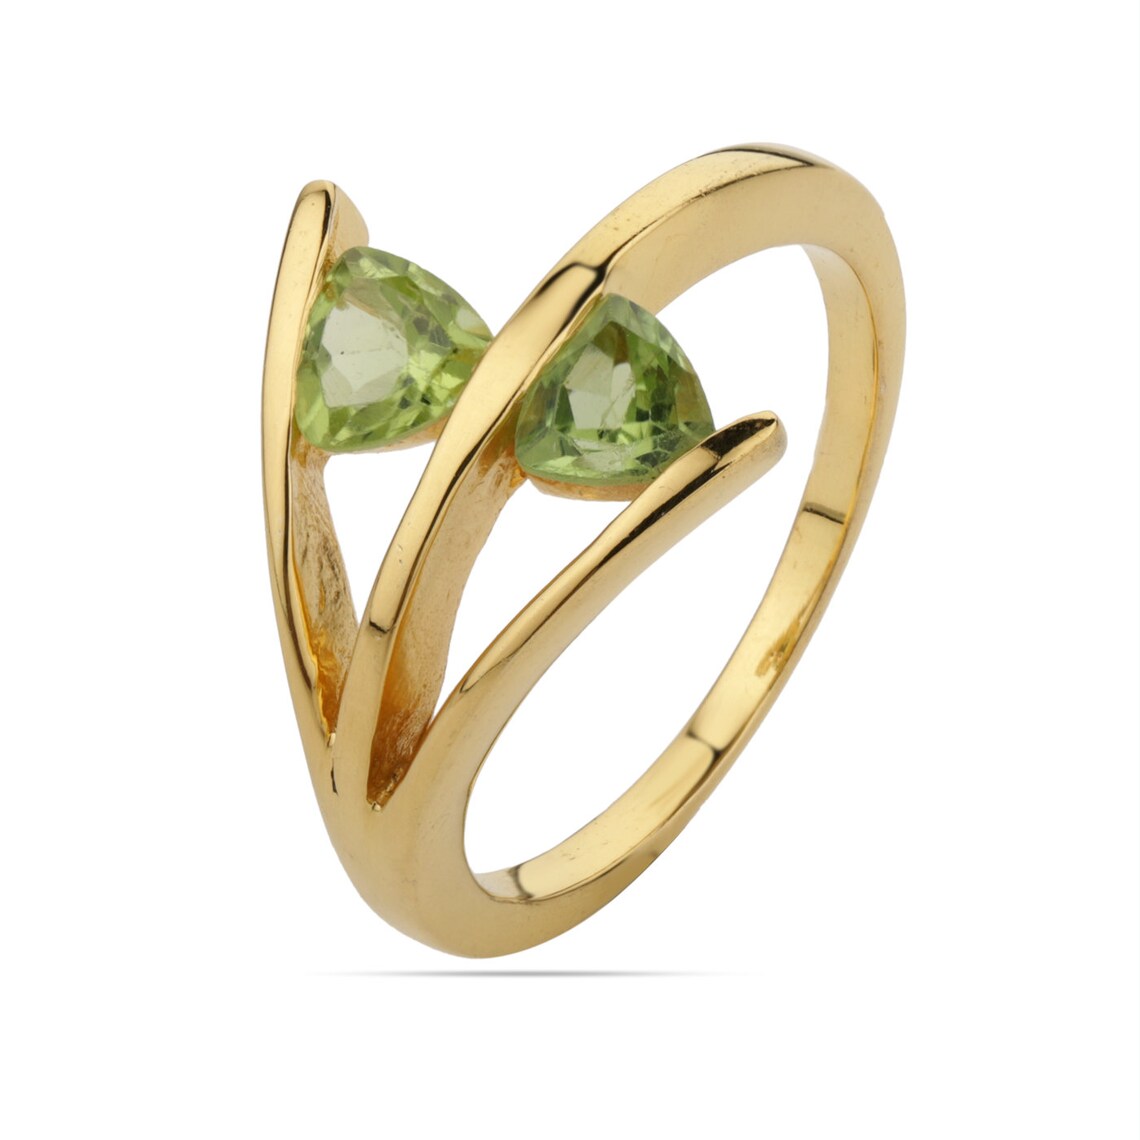 Peridot Ring, Peridot Gold Ring, 925 Sterling Silver Ring, Engagement Ring, Green Peridot Ring, Triangular Peridot Wedding Ring Handmade